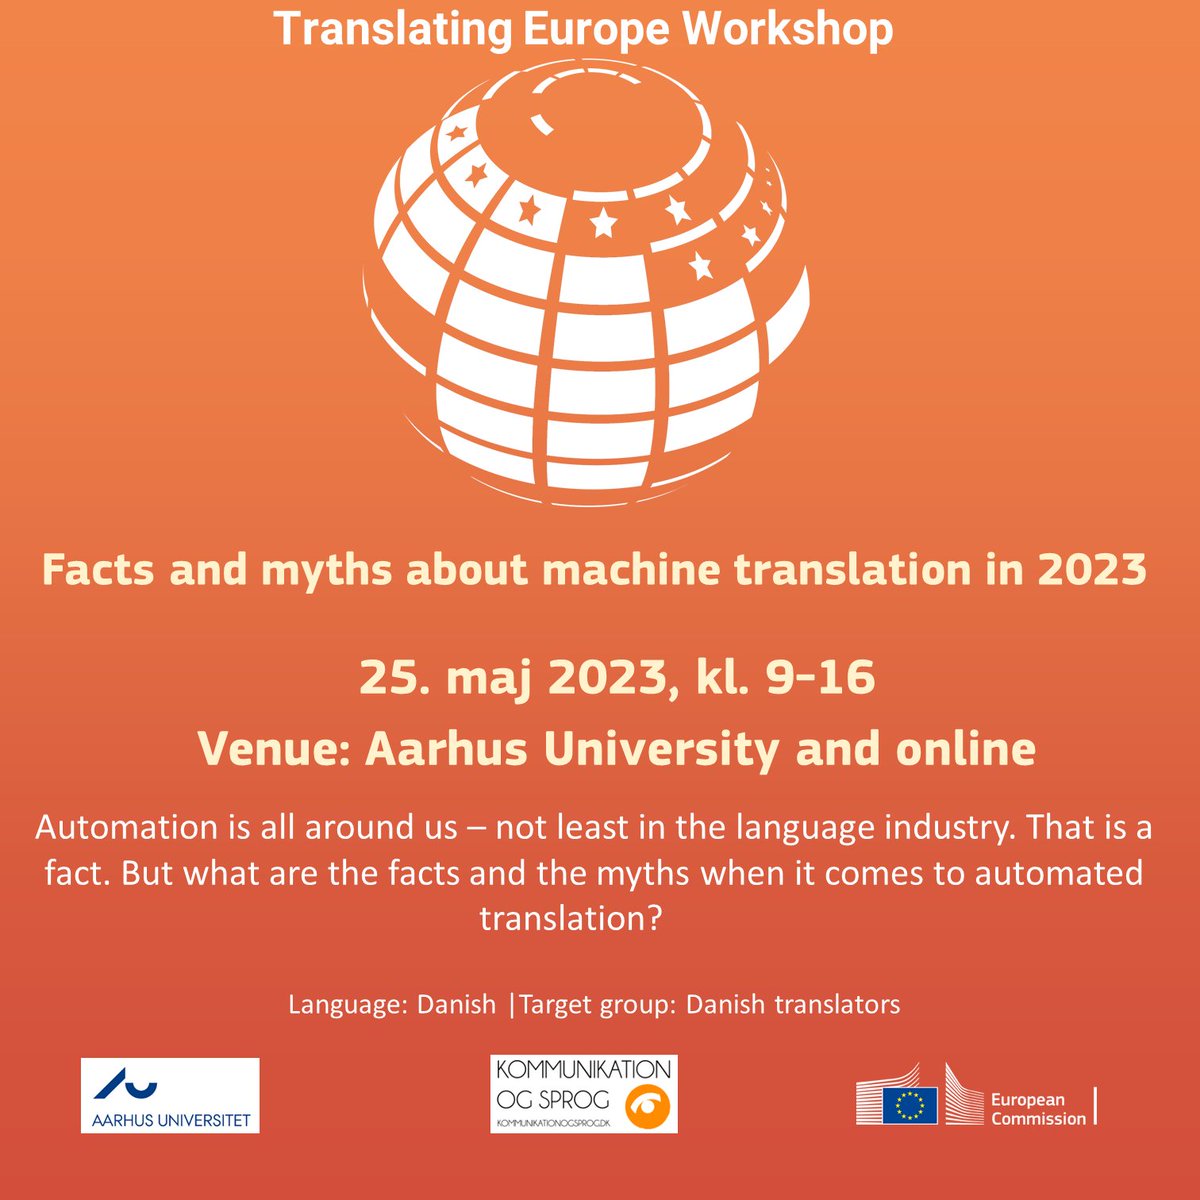 Translating Europe Workshop 2023 (au.dk)
#translatingeurope #machinetranslation #xl8  @translatores @euidanmark